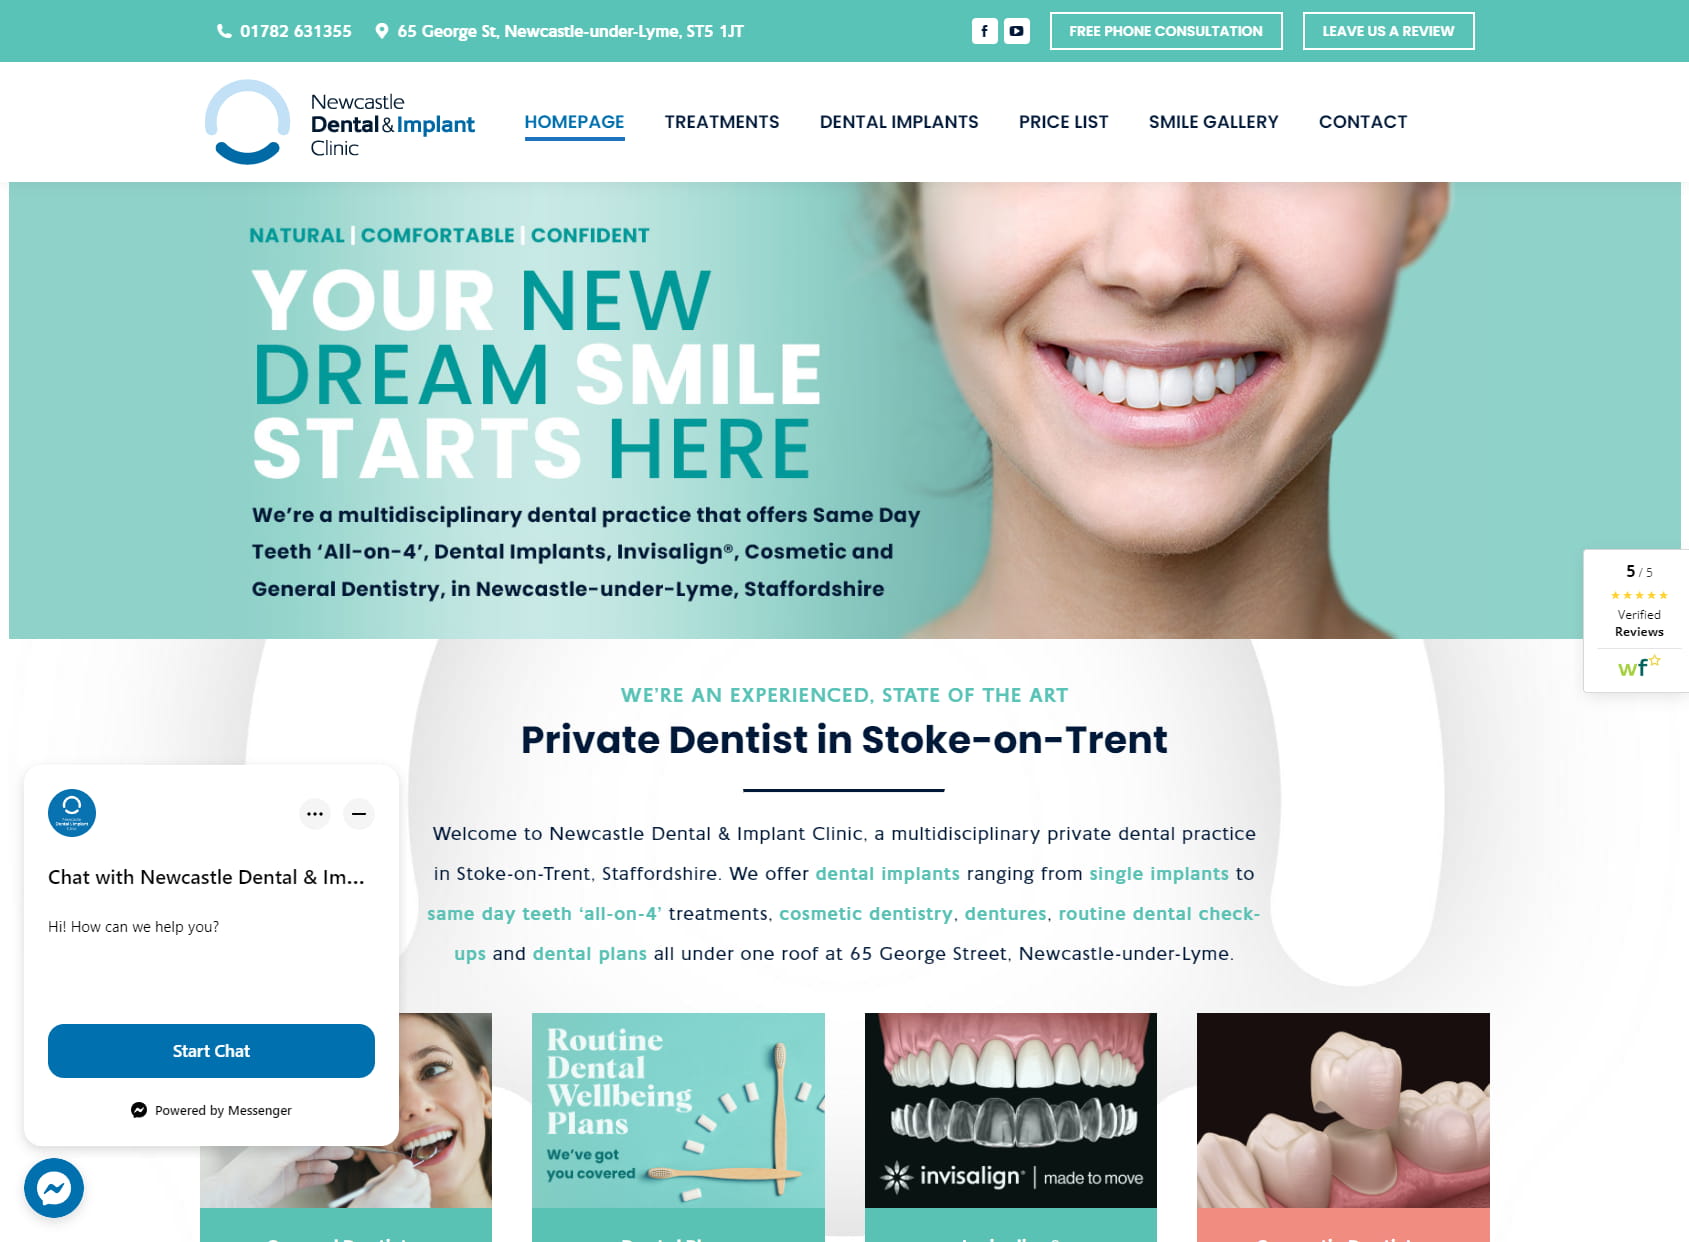 Newcastle Dental & Implant Clinic